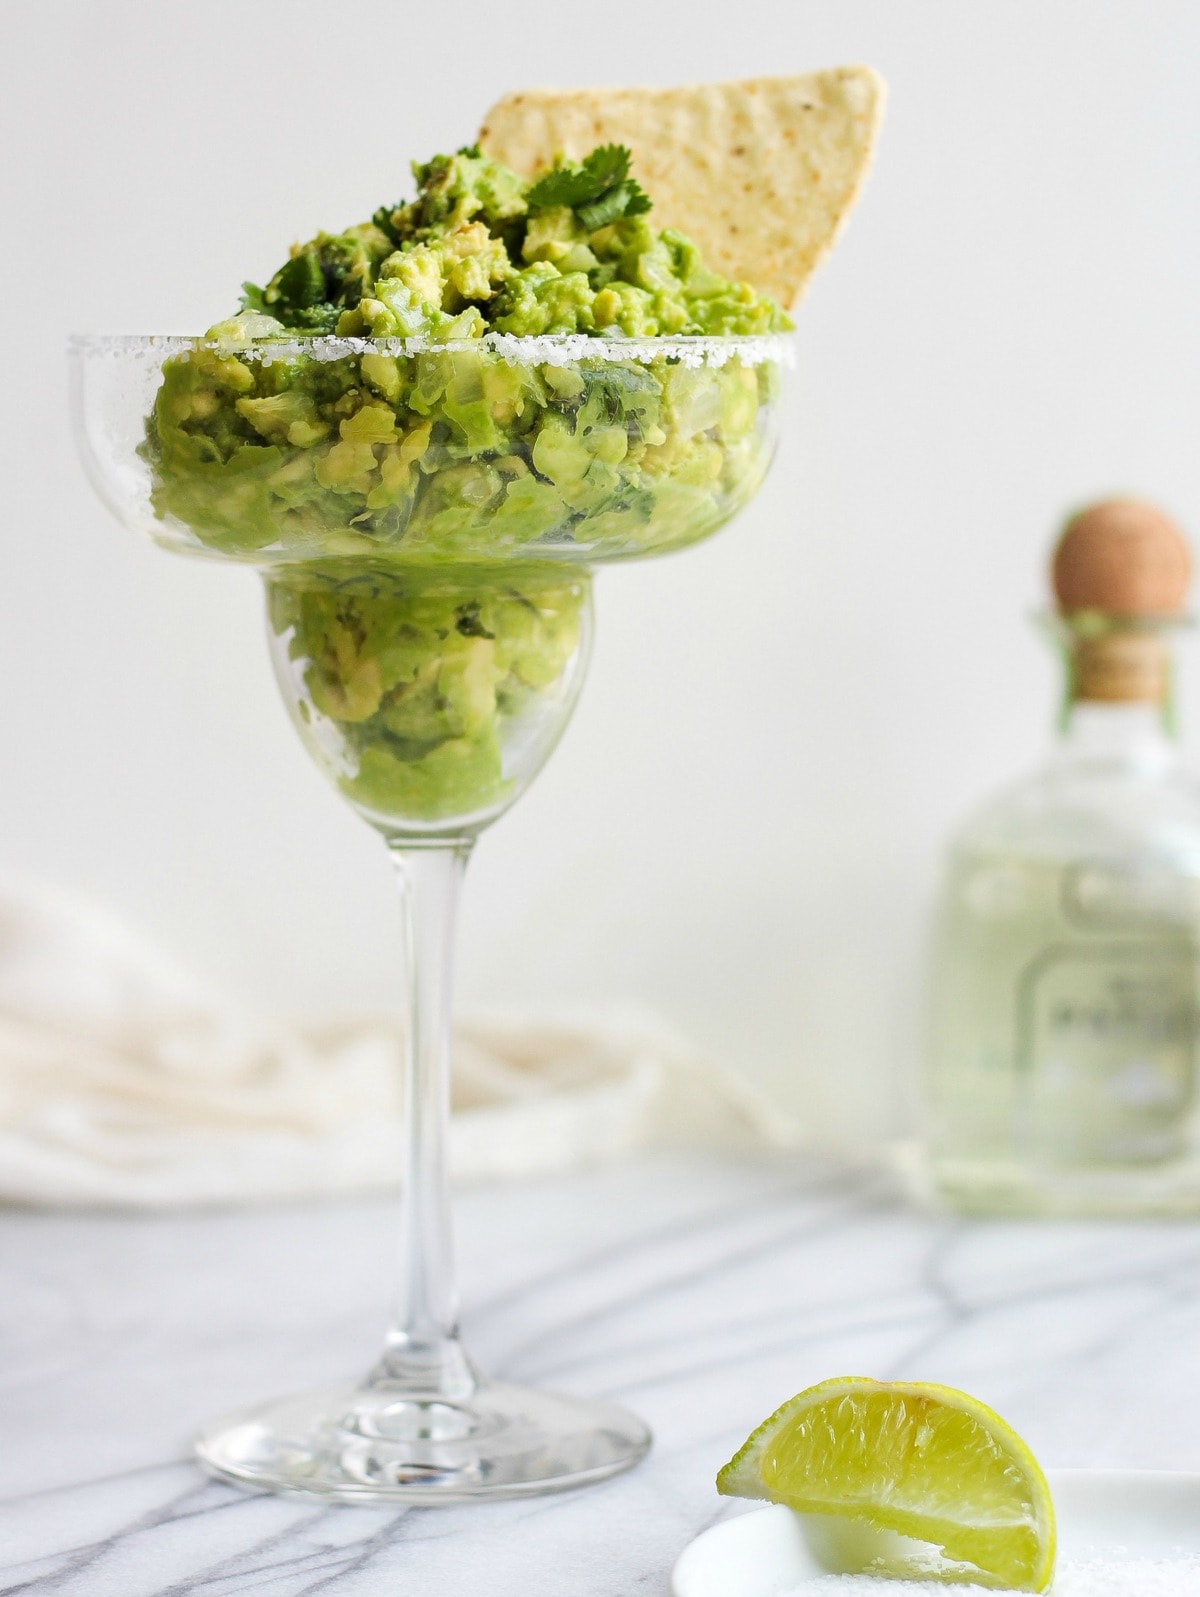 chunky guacamole recipe in a margarita glass